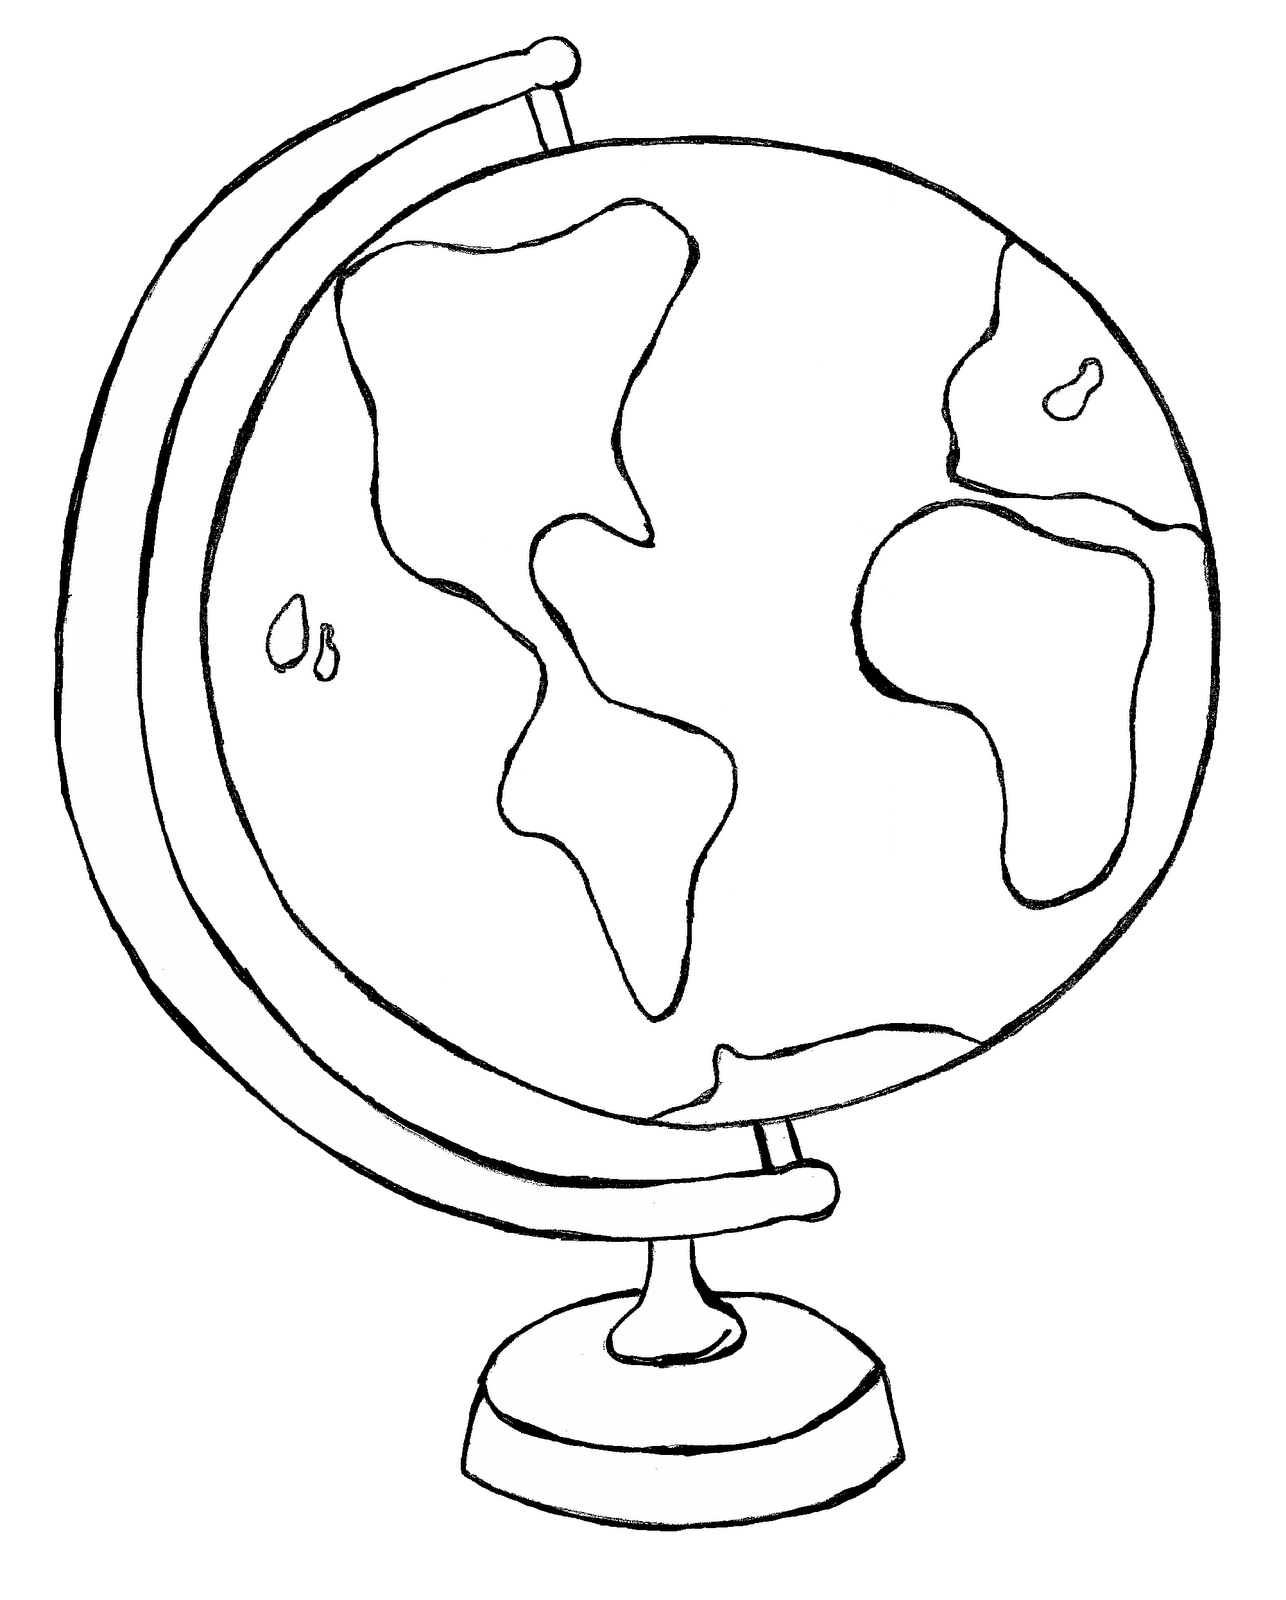 Globe  black and white globe clipart black and white free images 5